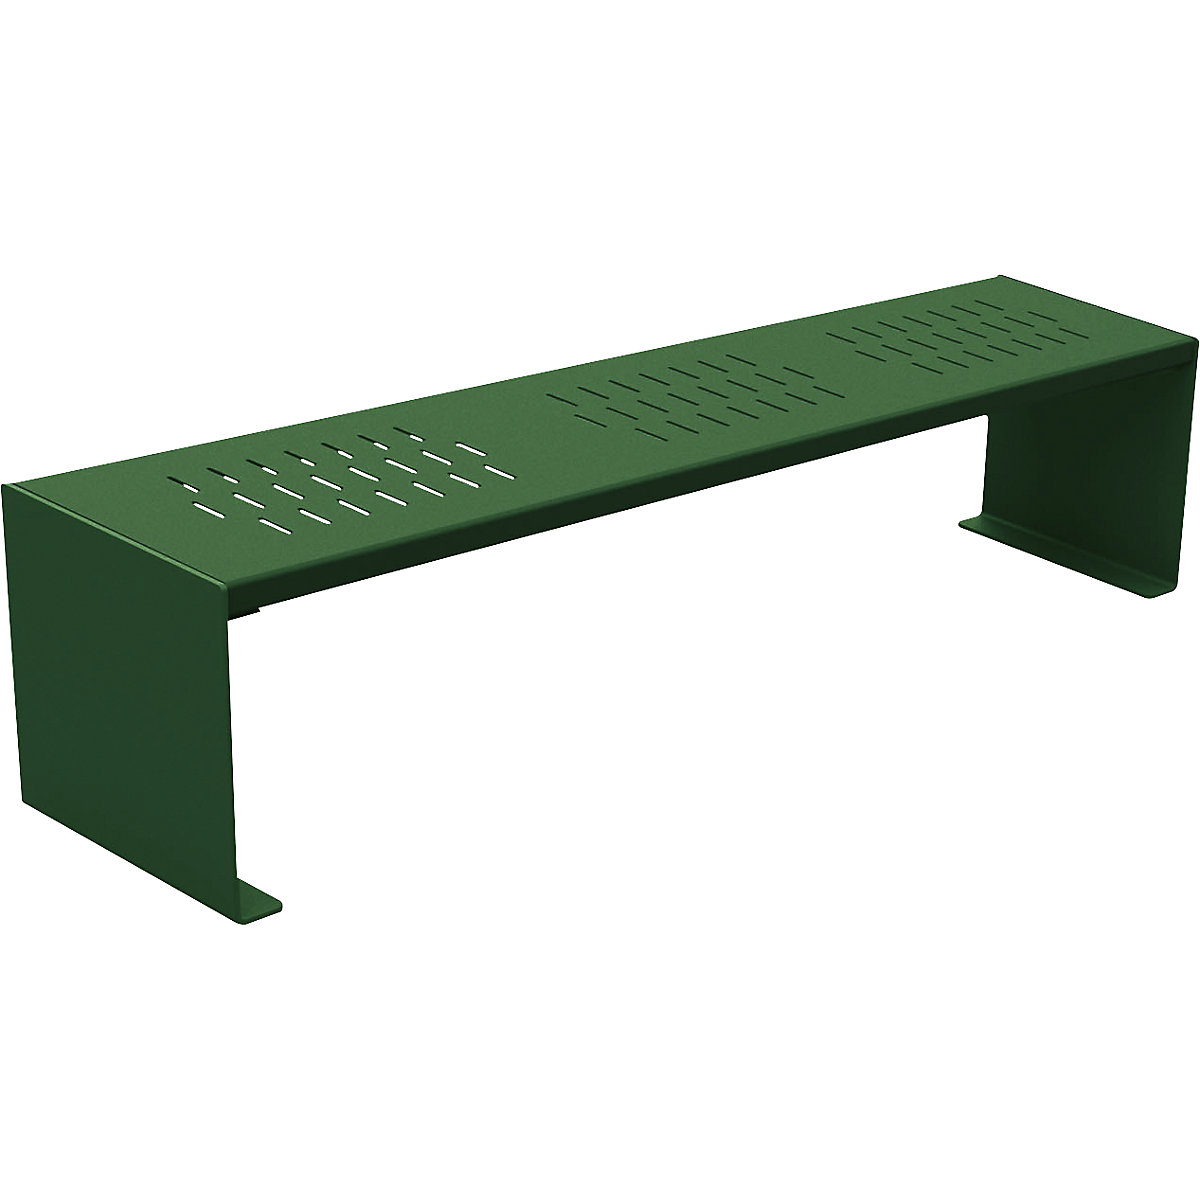 KUBE bench made of steel – PROCITY